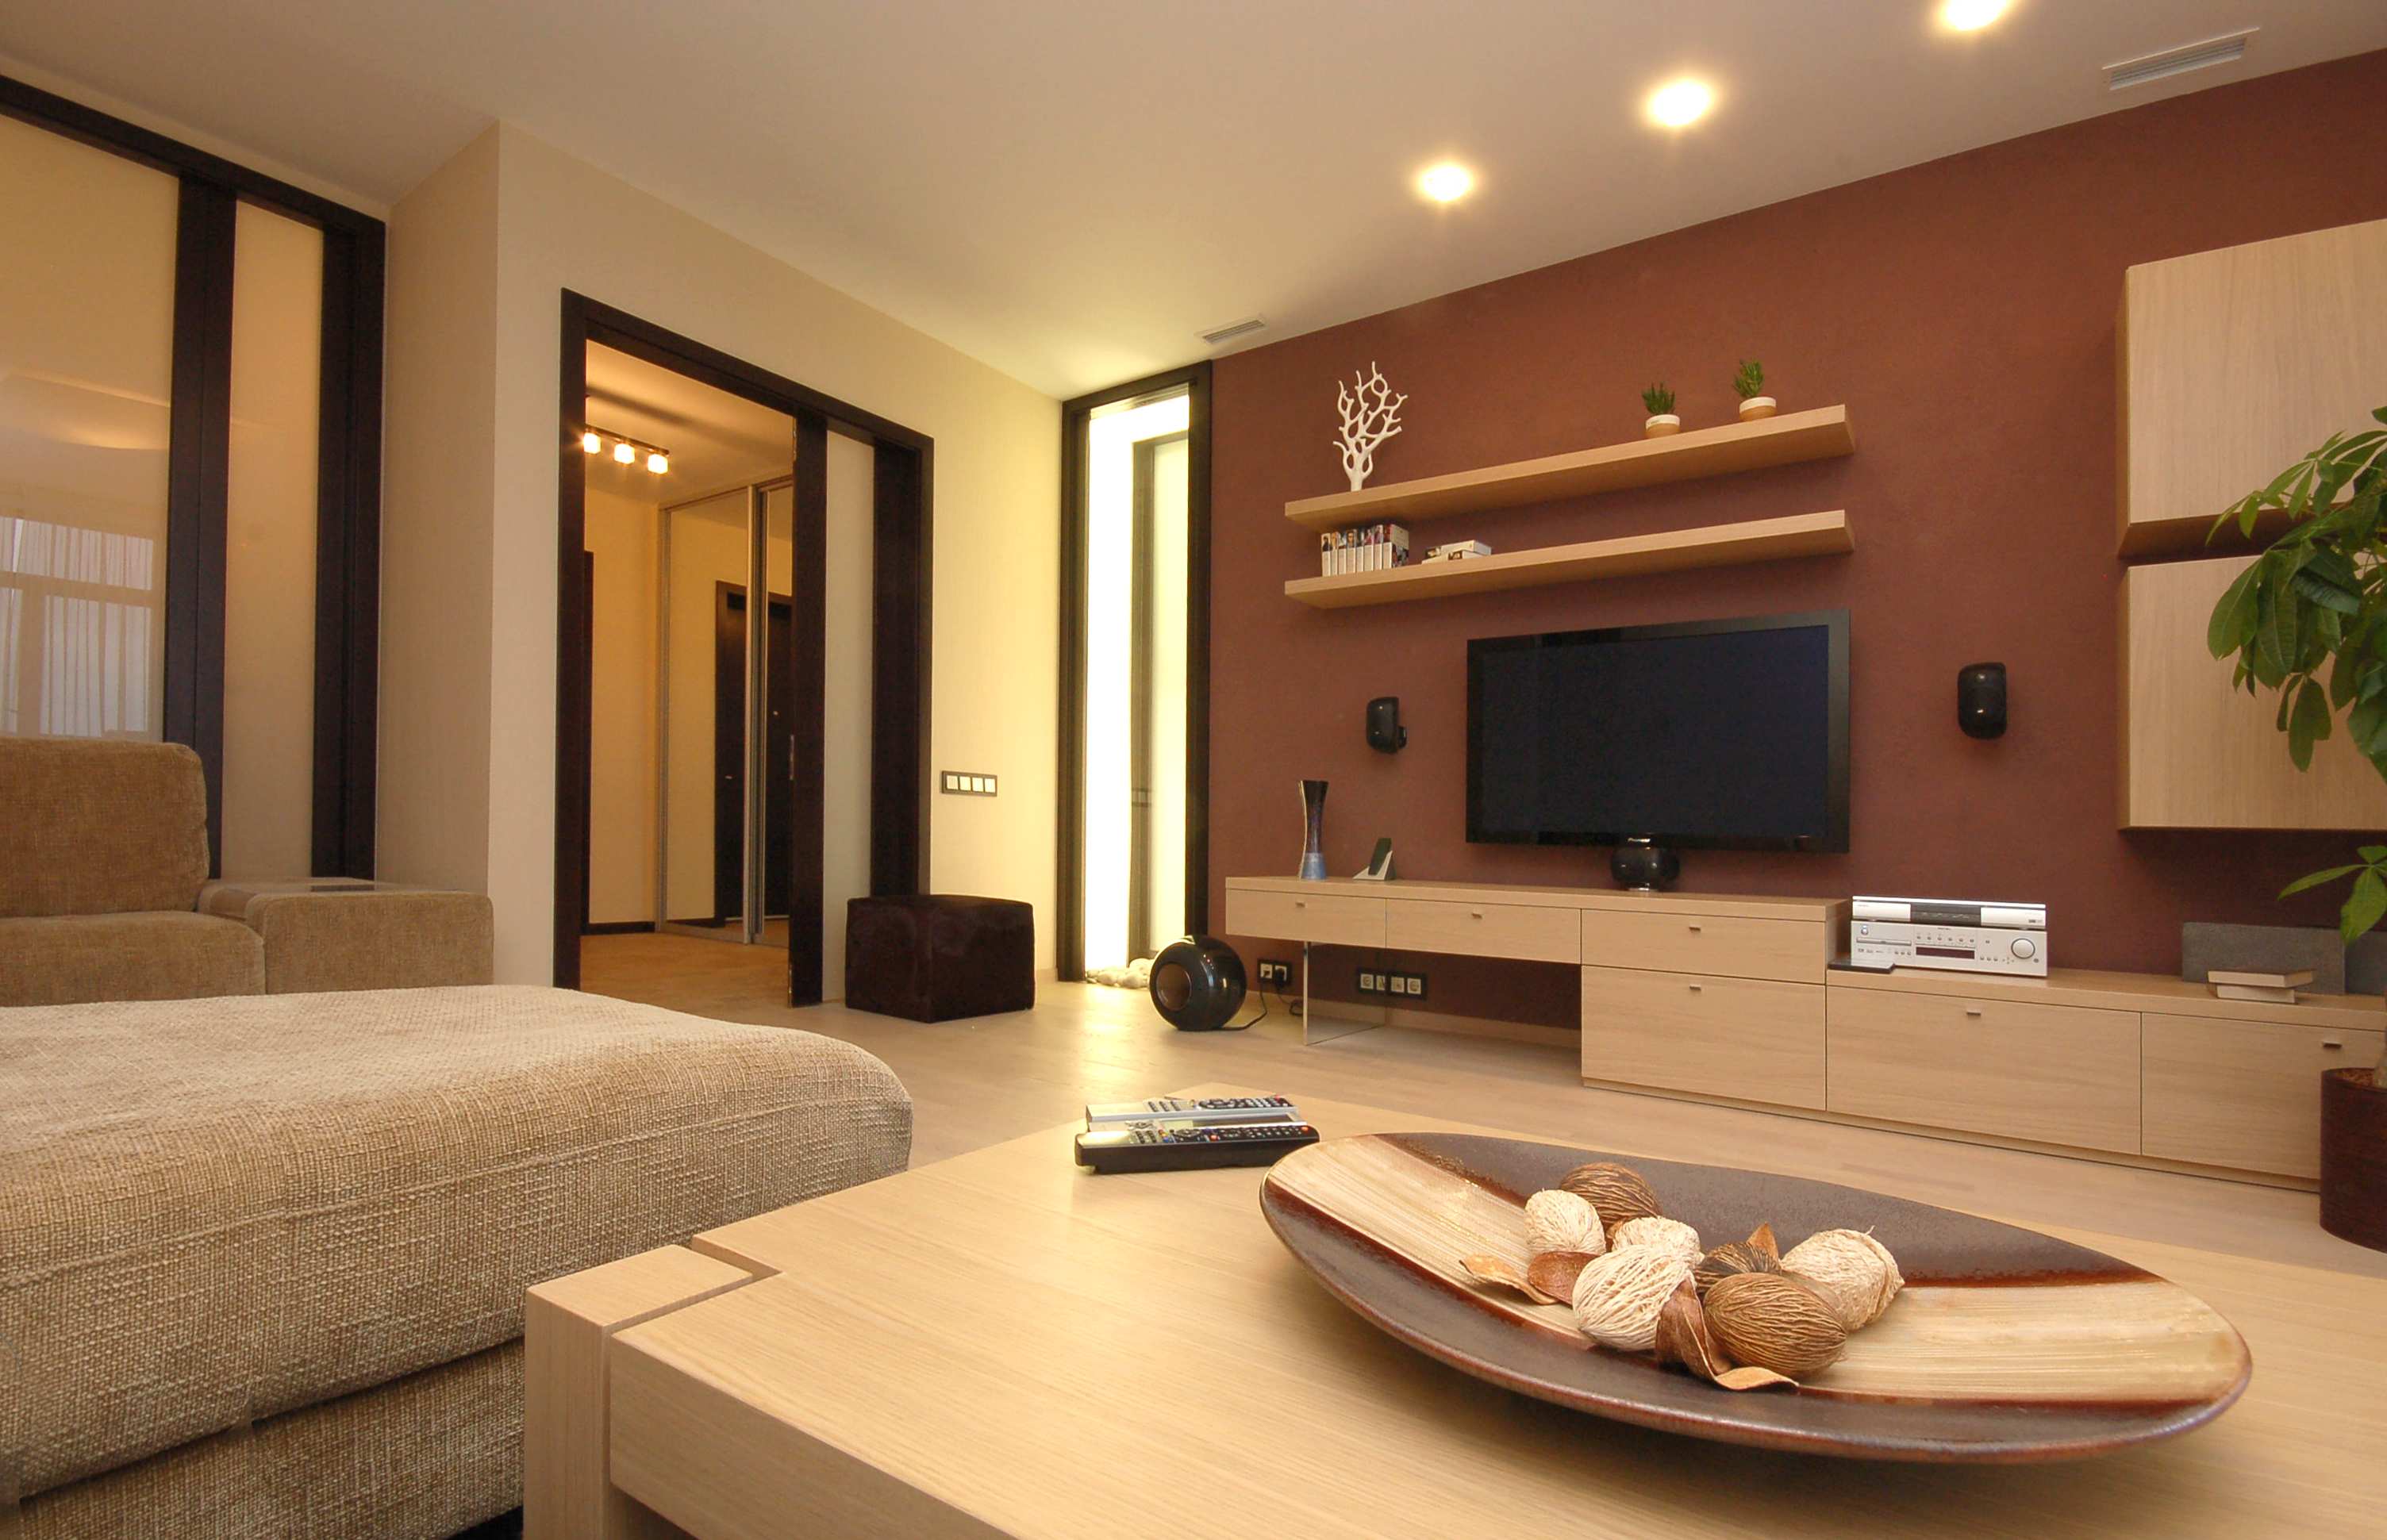 25 Modern Living Room Decor Ideas - The WoW Style